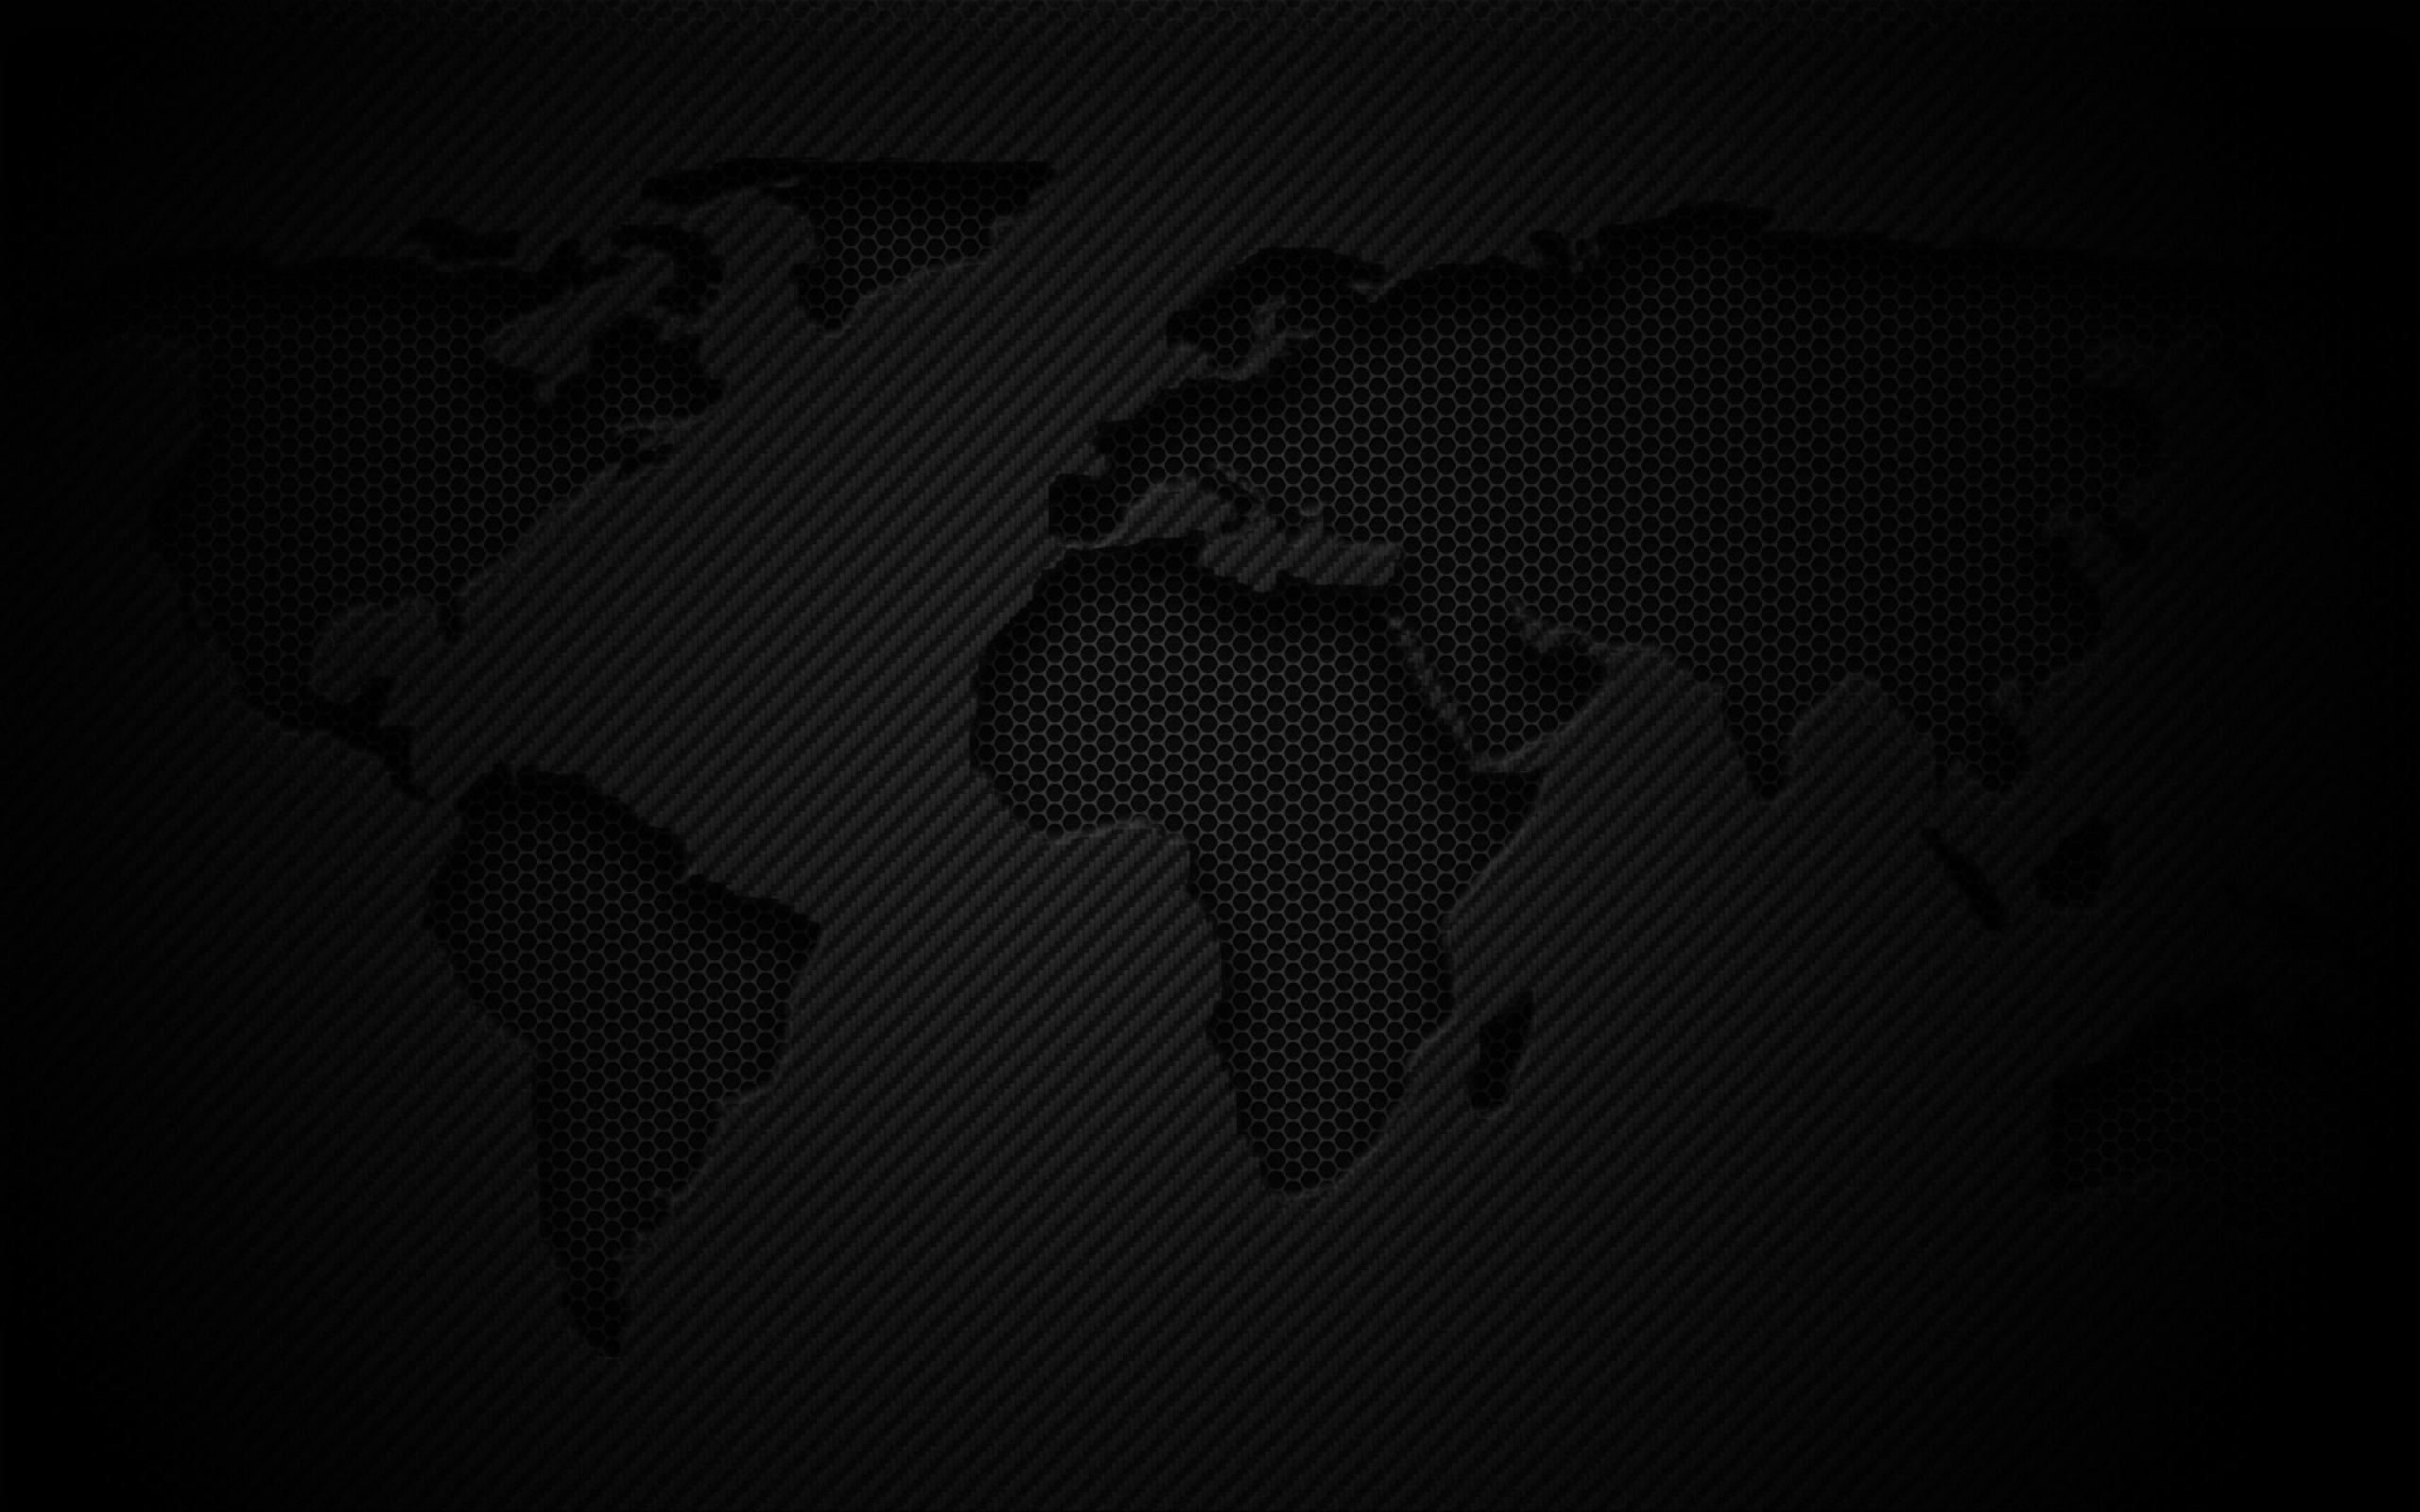 World Map Dark Mac Wallpaper Download | Free Mac Wallpapers Download